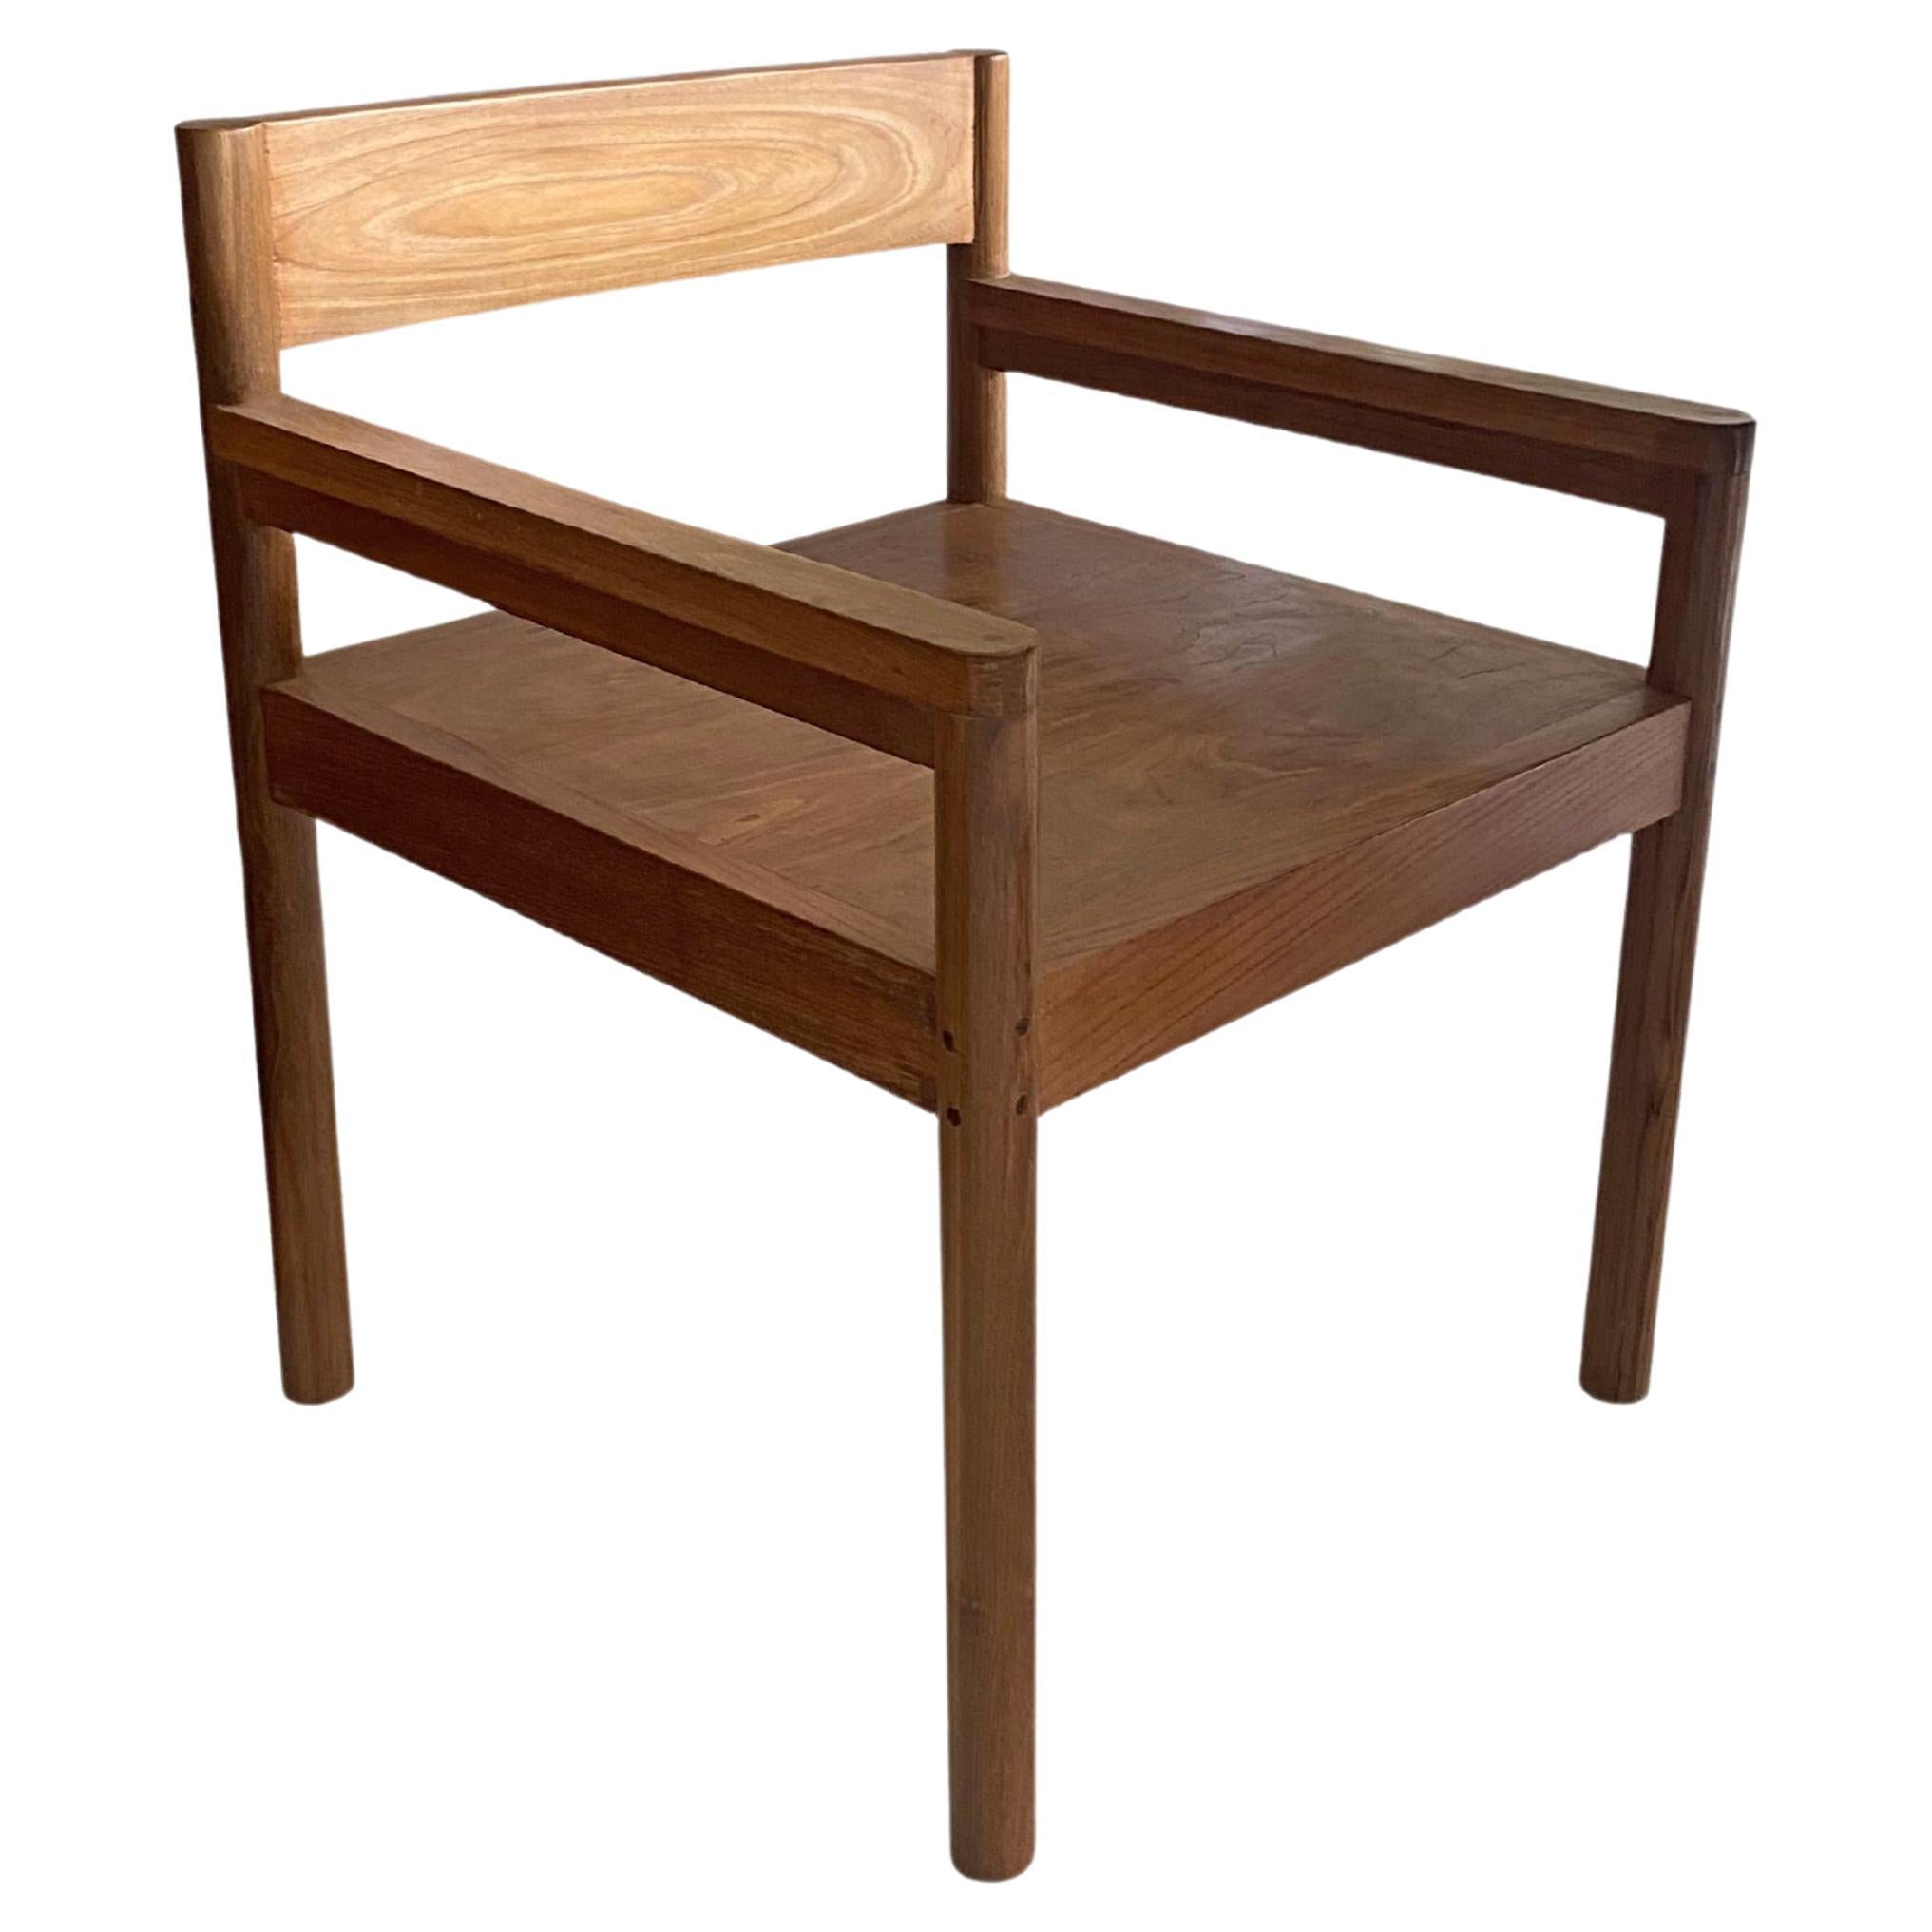 Modern Teak Wood Chair With stunning Wood Pattern Detailing